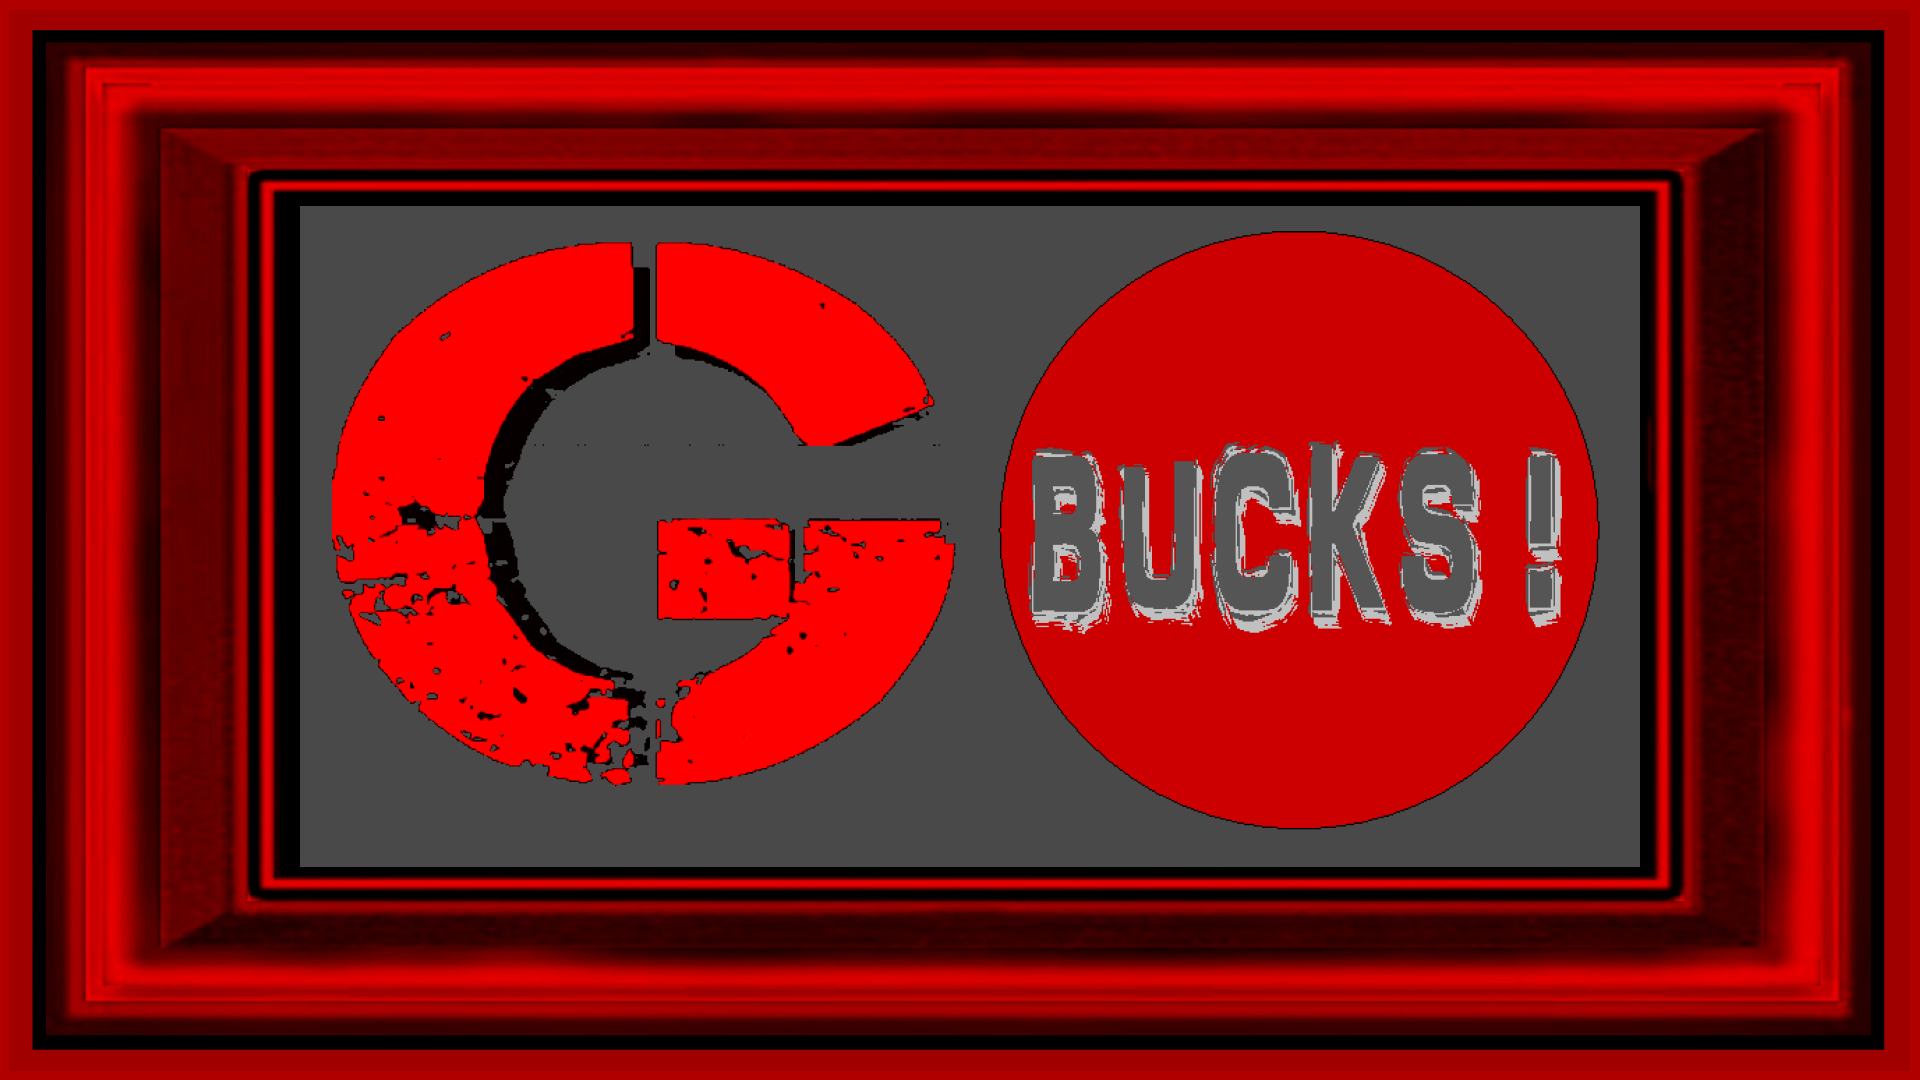 Go Bucks Ohio State Football Wallpaper